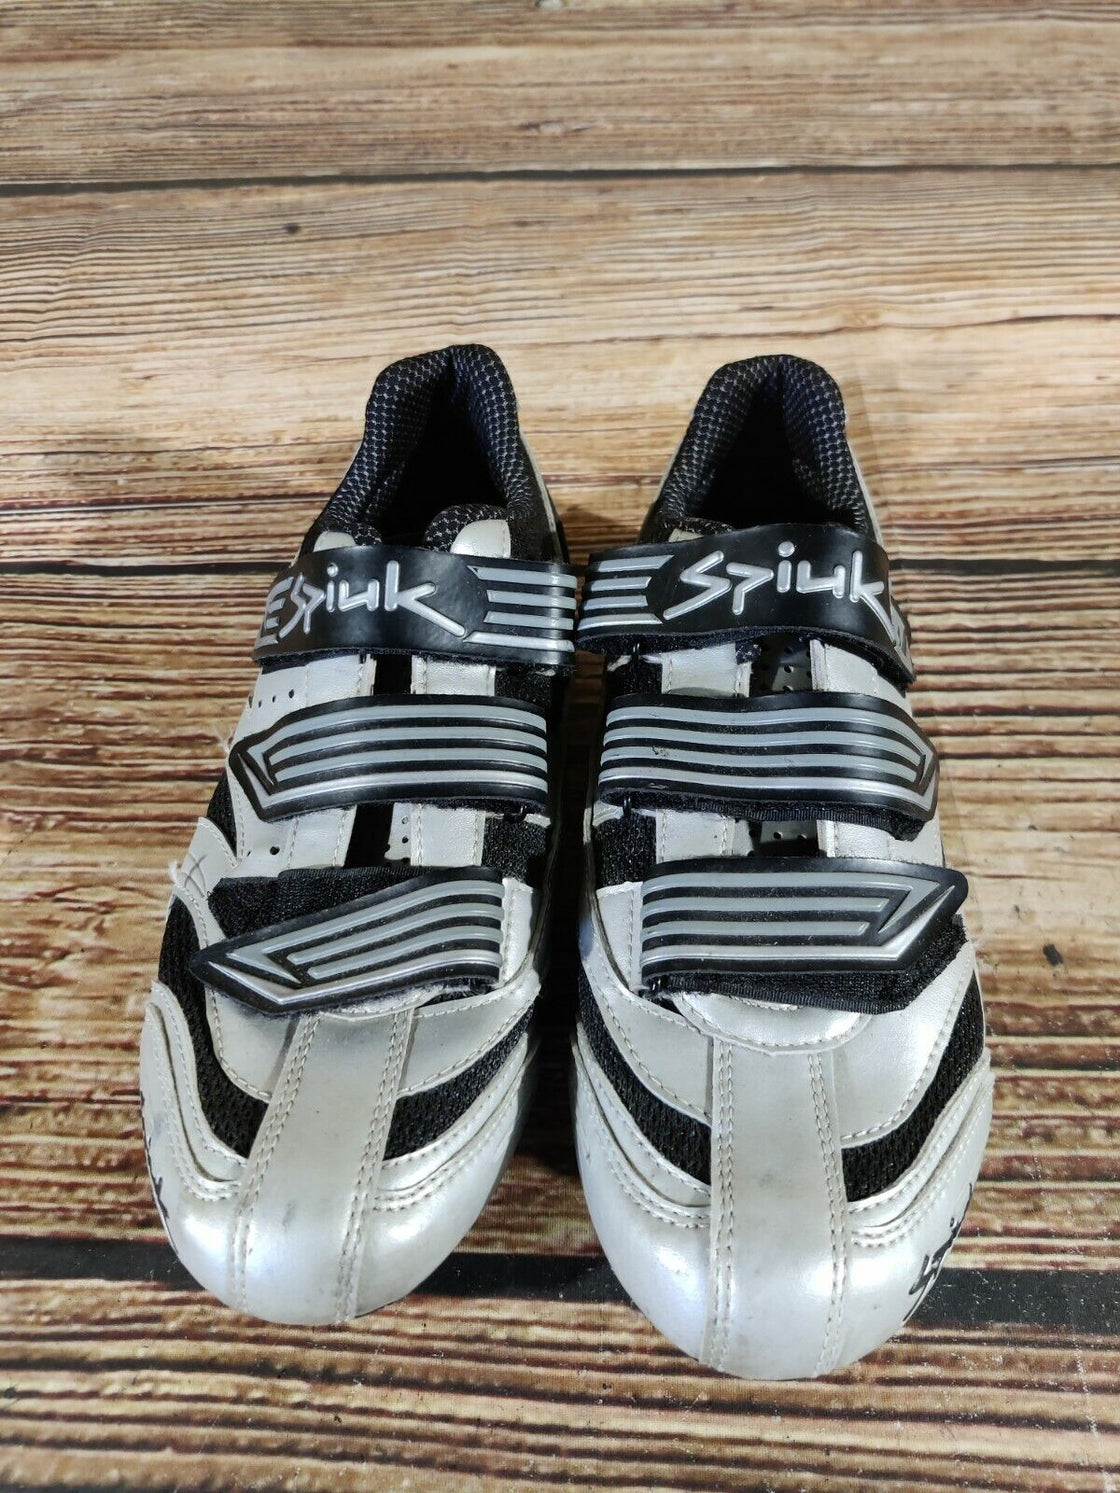 SPIUK Road Cycling Shoes Biking Boots 3 Bolts Size EU41, US7.5